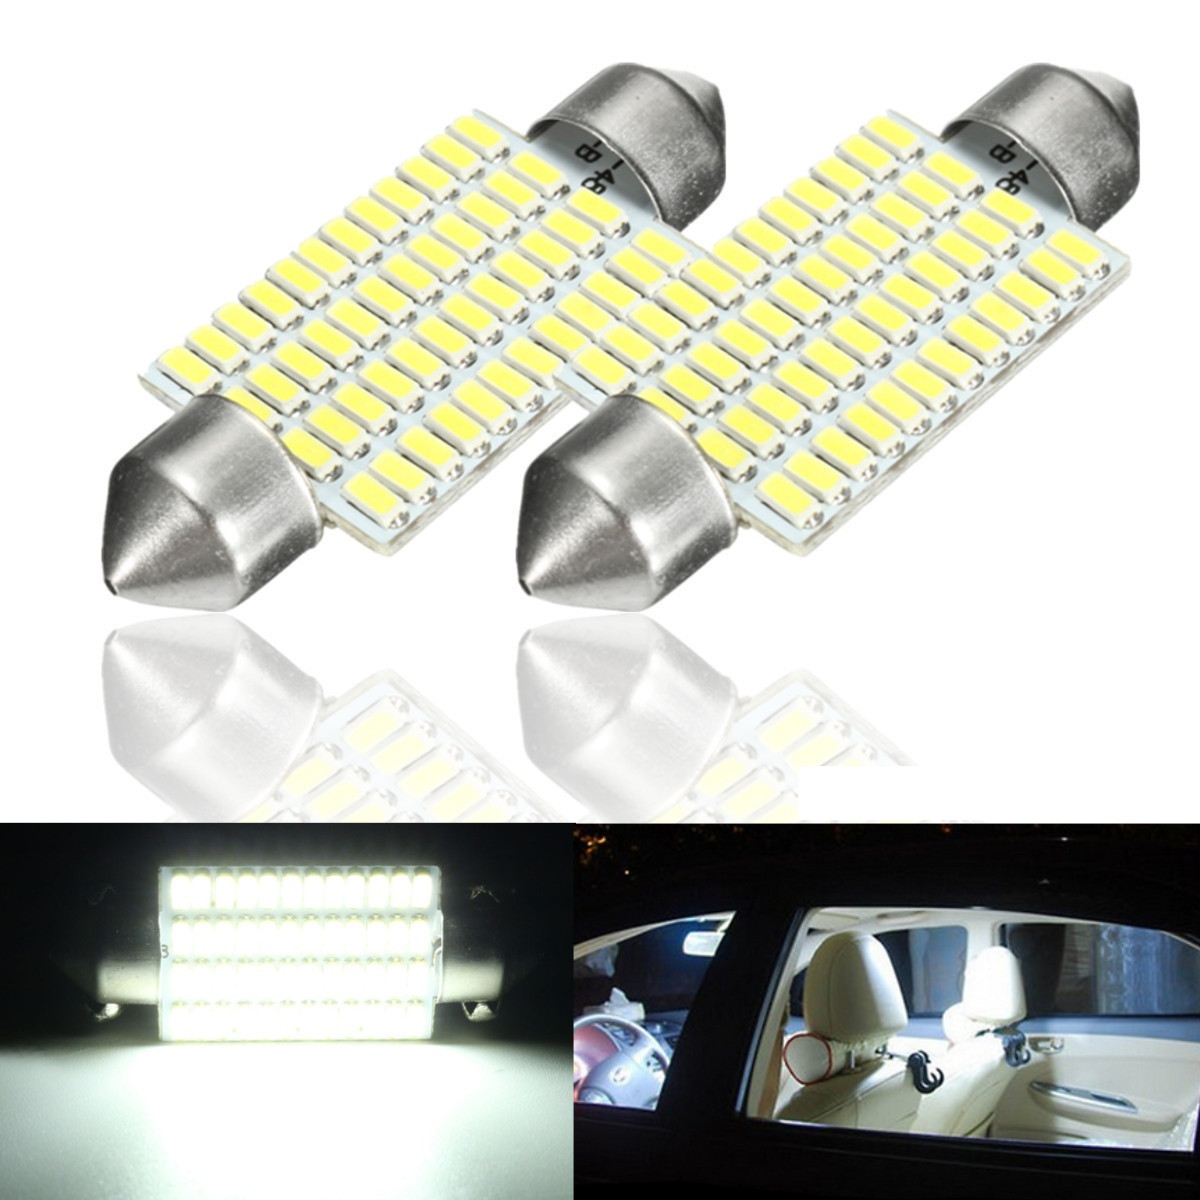 

2pcs 3w 41мм интерьер автомобиля LED festonn readding крыша свет колбы лампы белый